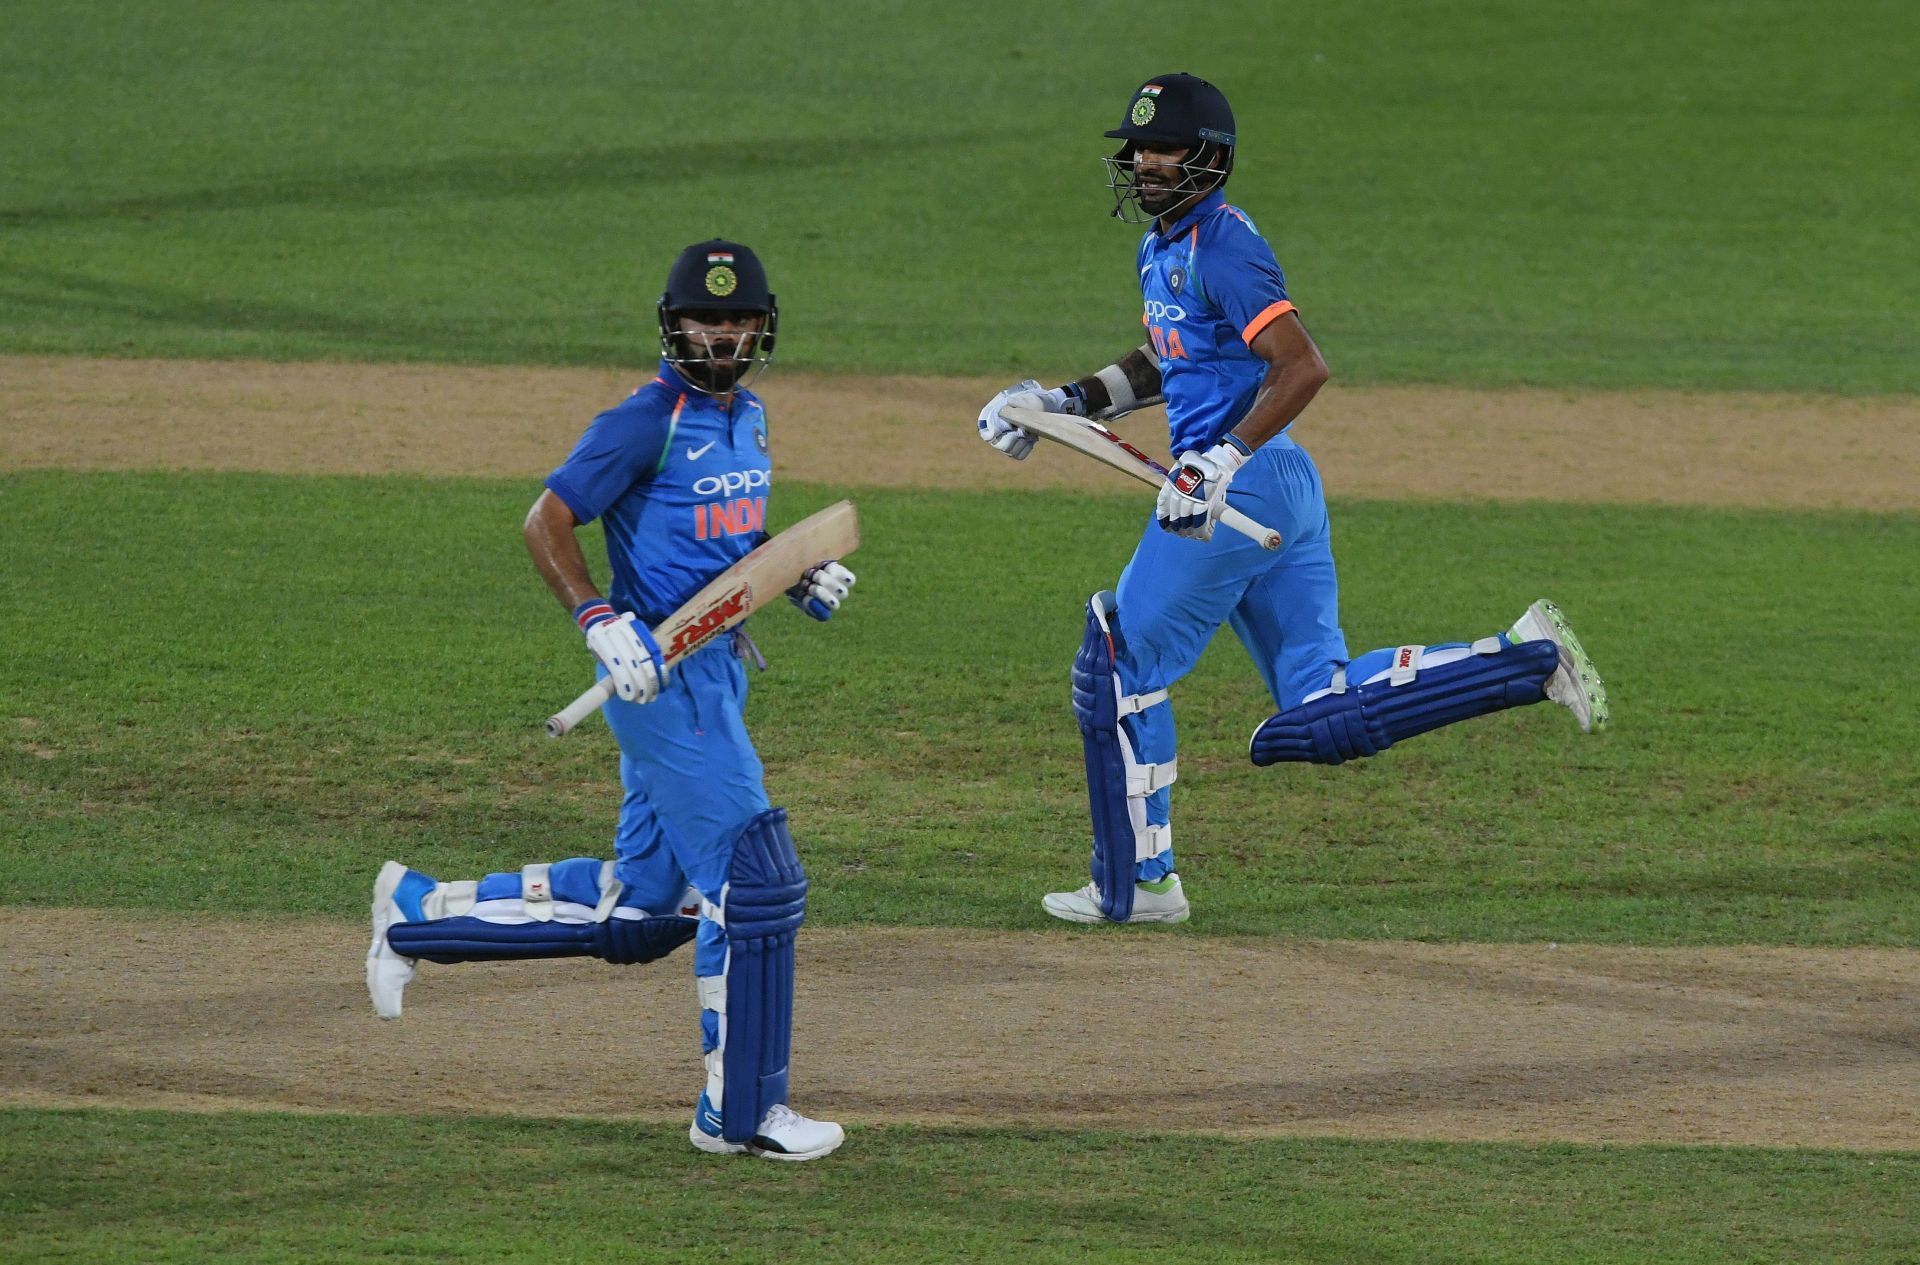 Virat Kohli and Shikhar Dhawan are the top two run-scorers in IPL history